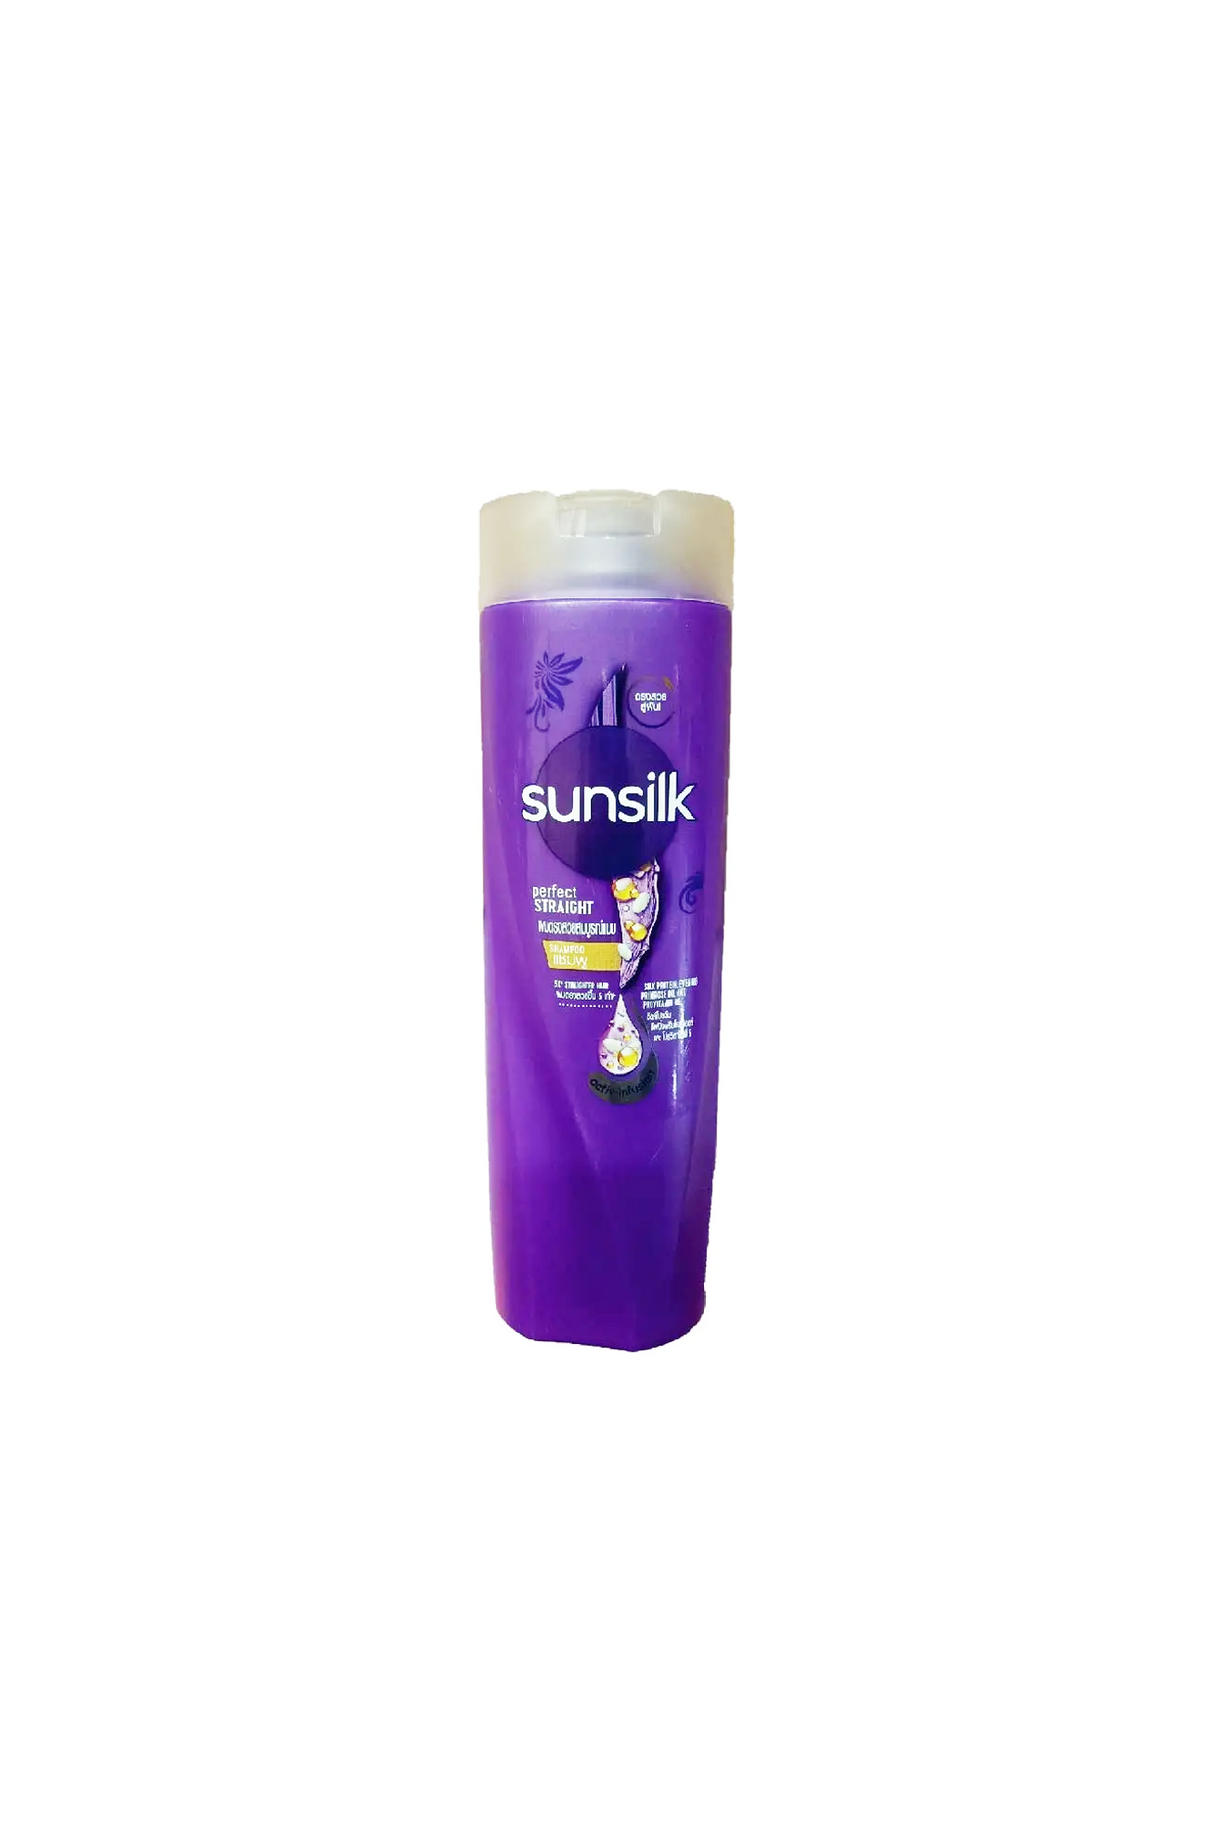 sunsilk shampoo perfect straight 160ml